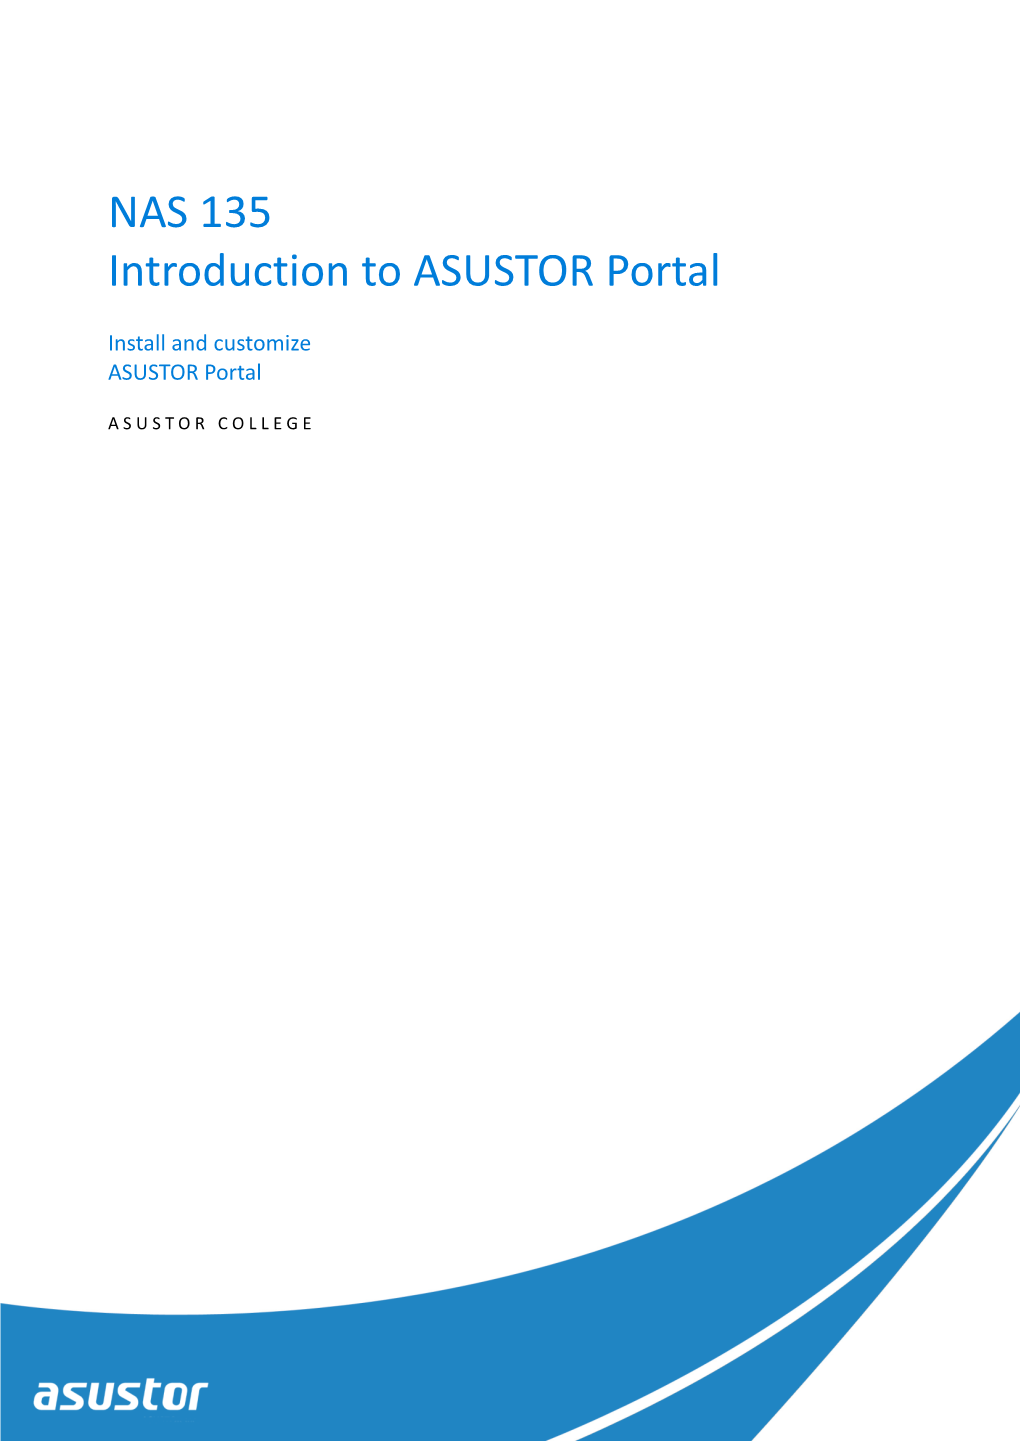 NAS 135 Introduction to ASUSTOR Portal